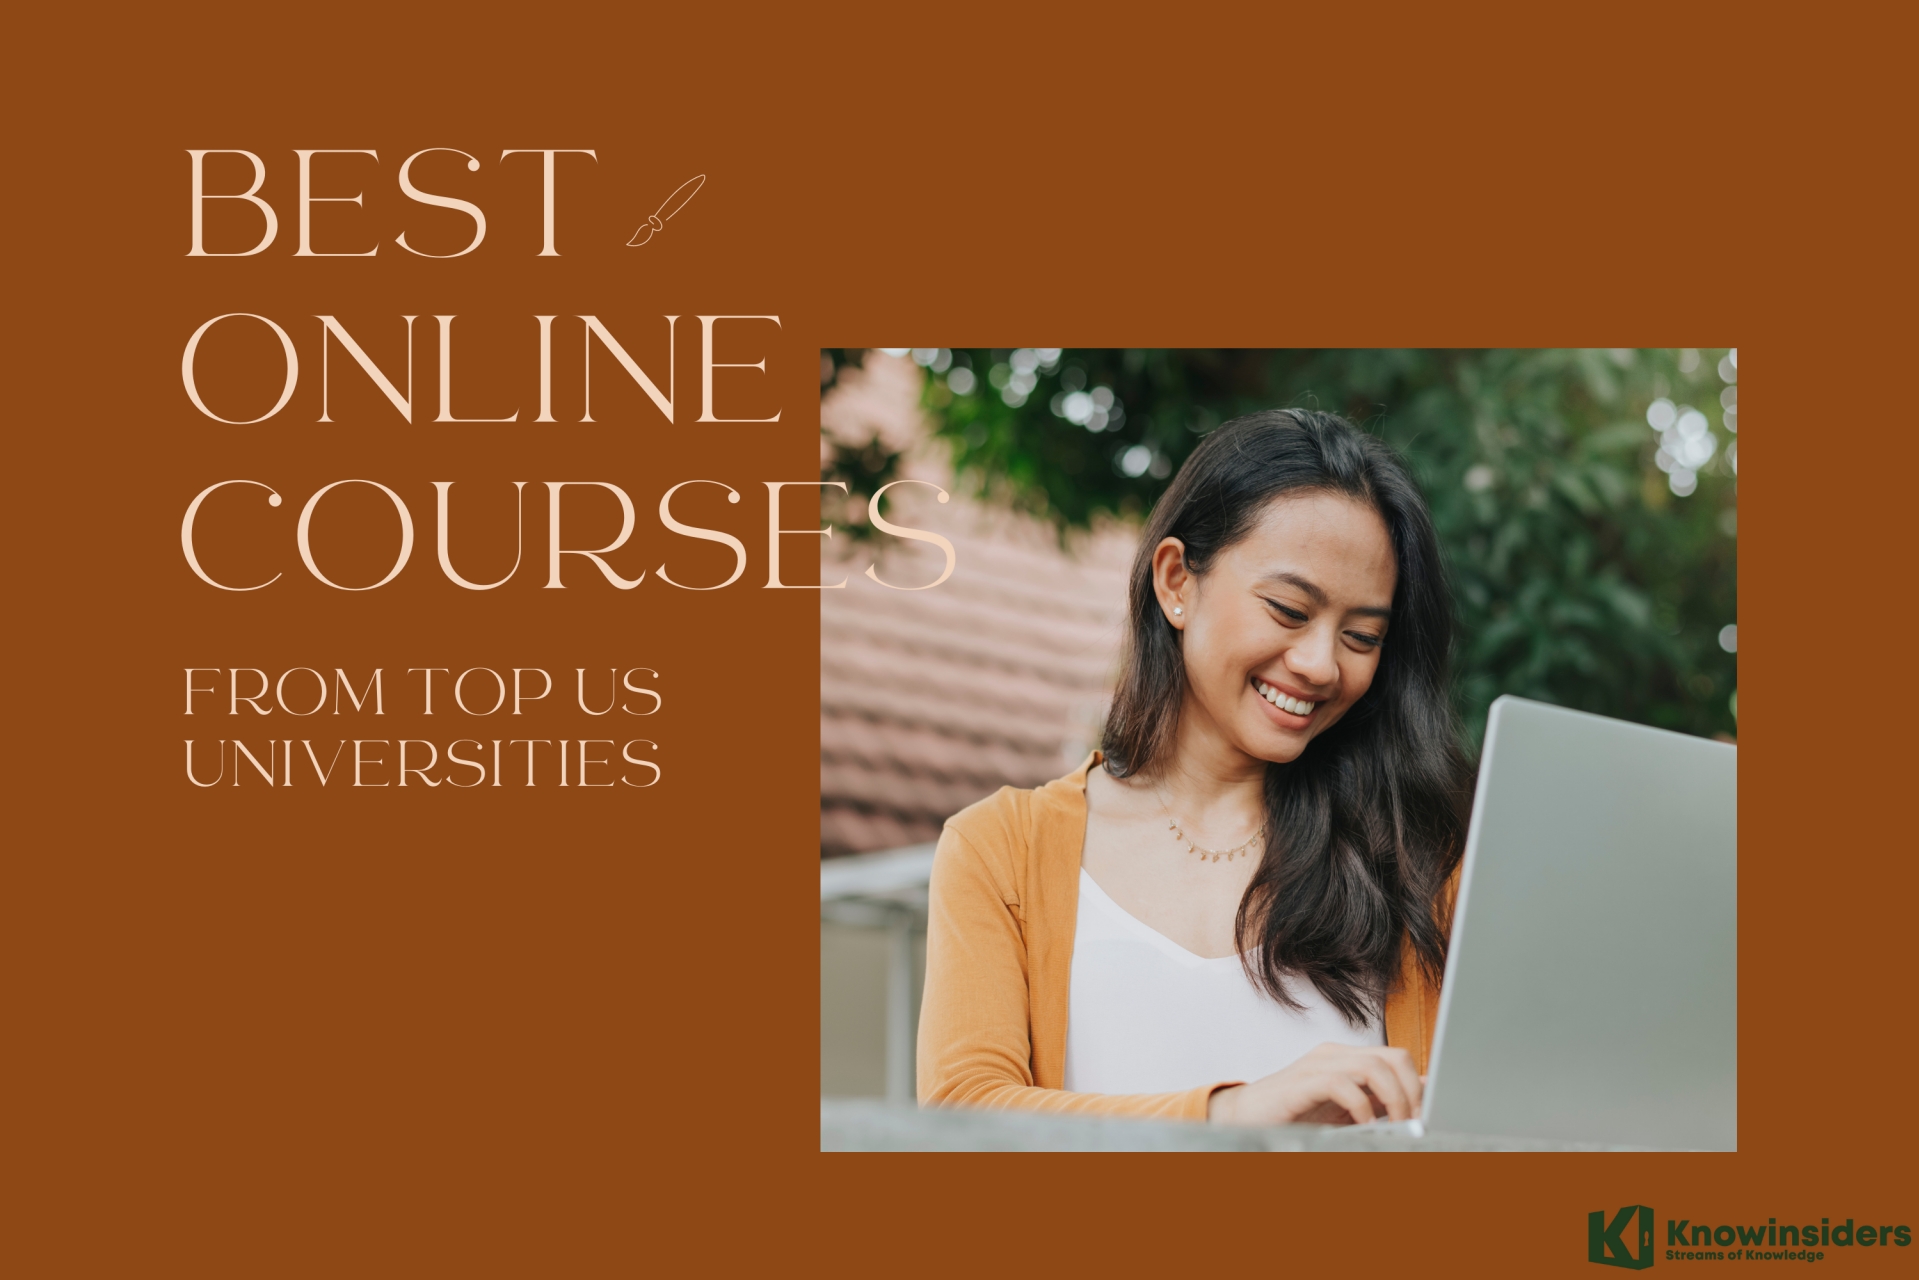 Top 15 Most Popular Online Courses from US Universities